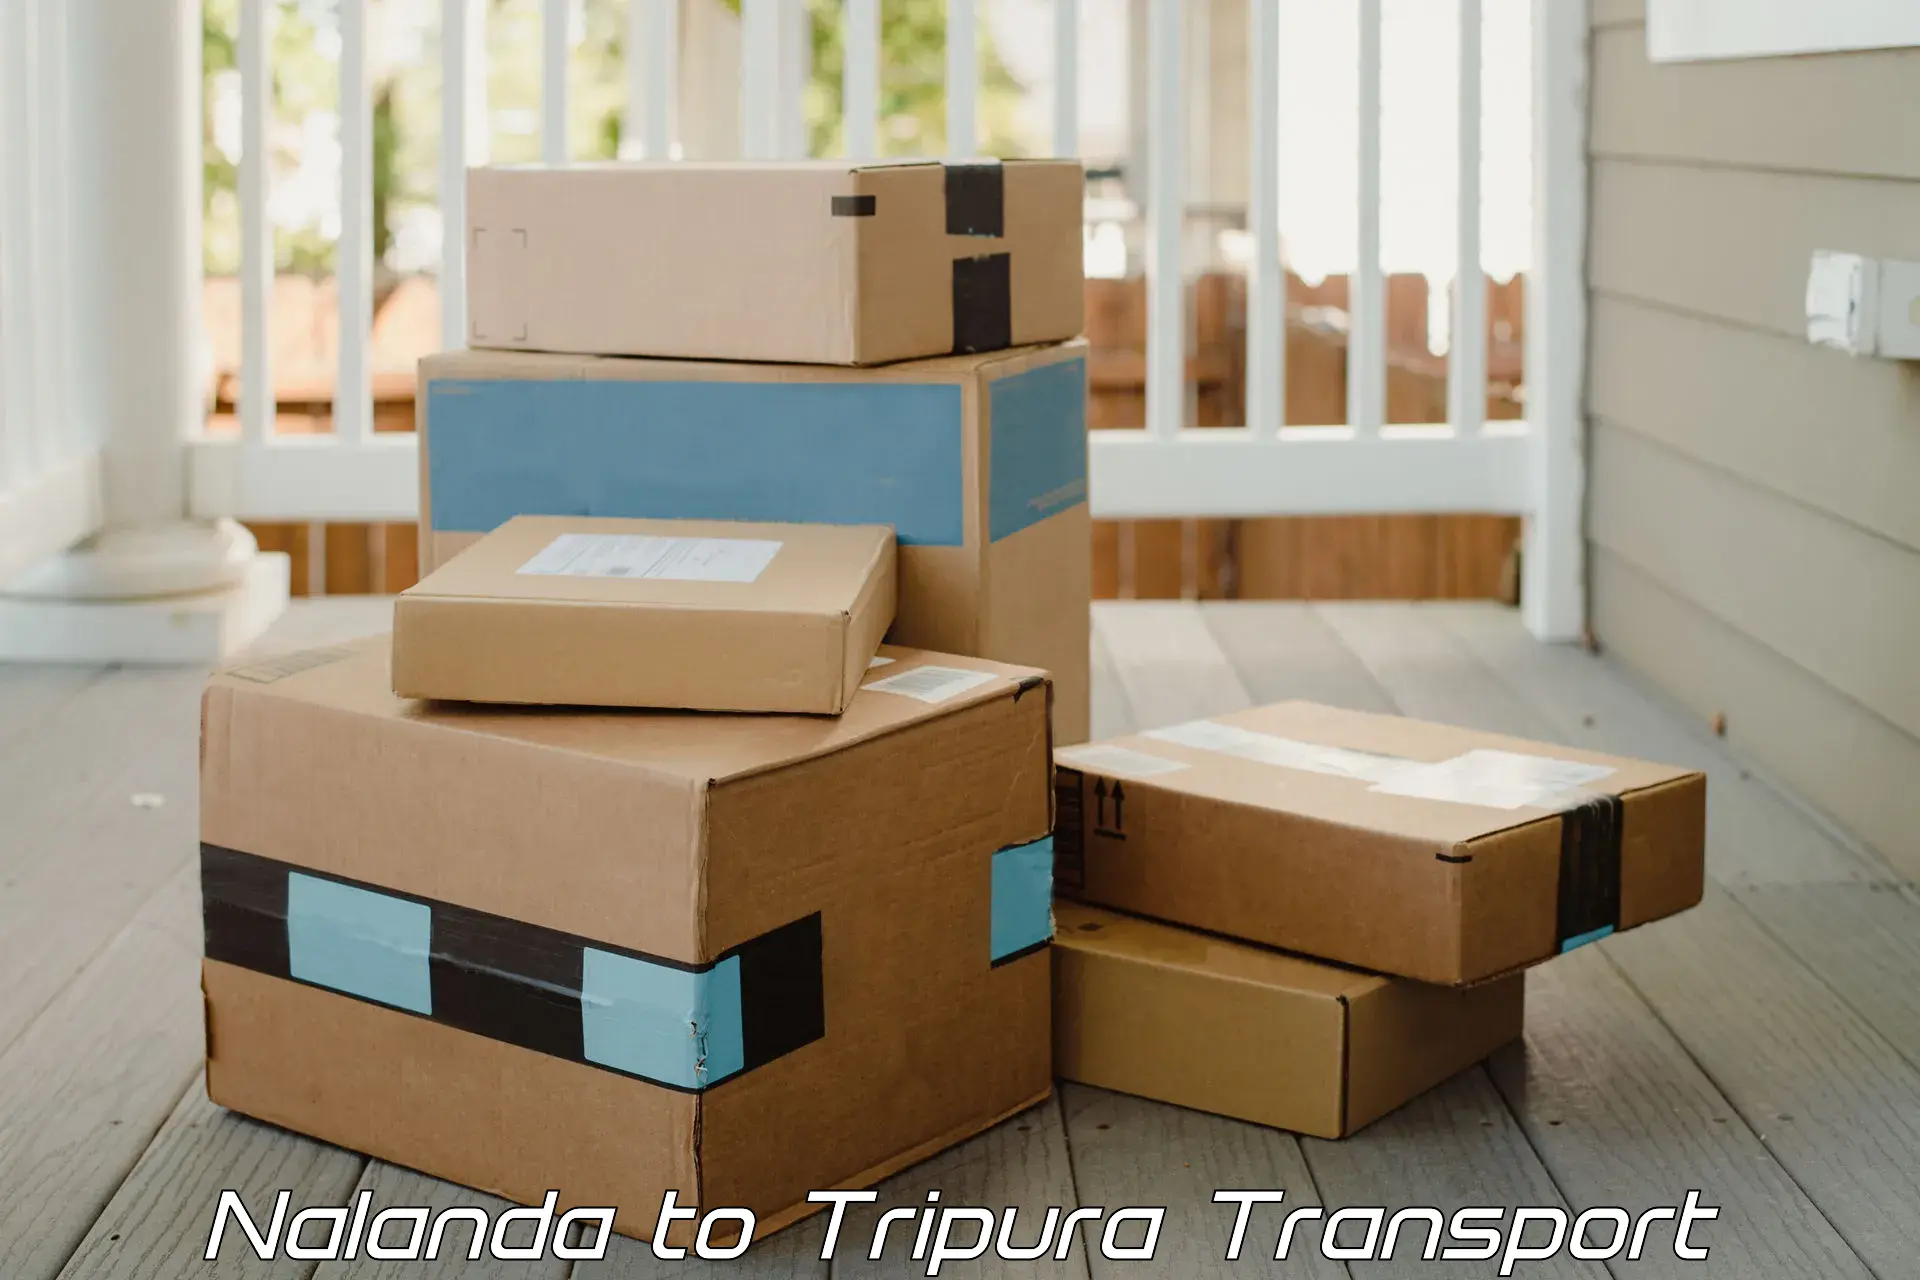 Nearby transport service Nalanda to Tripura